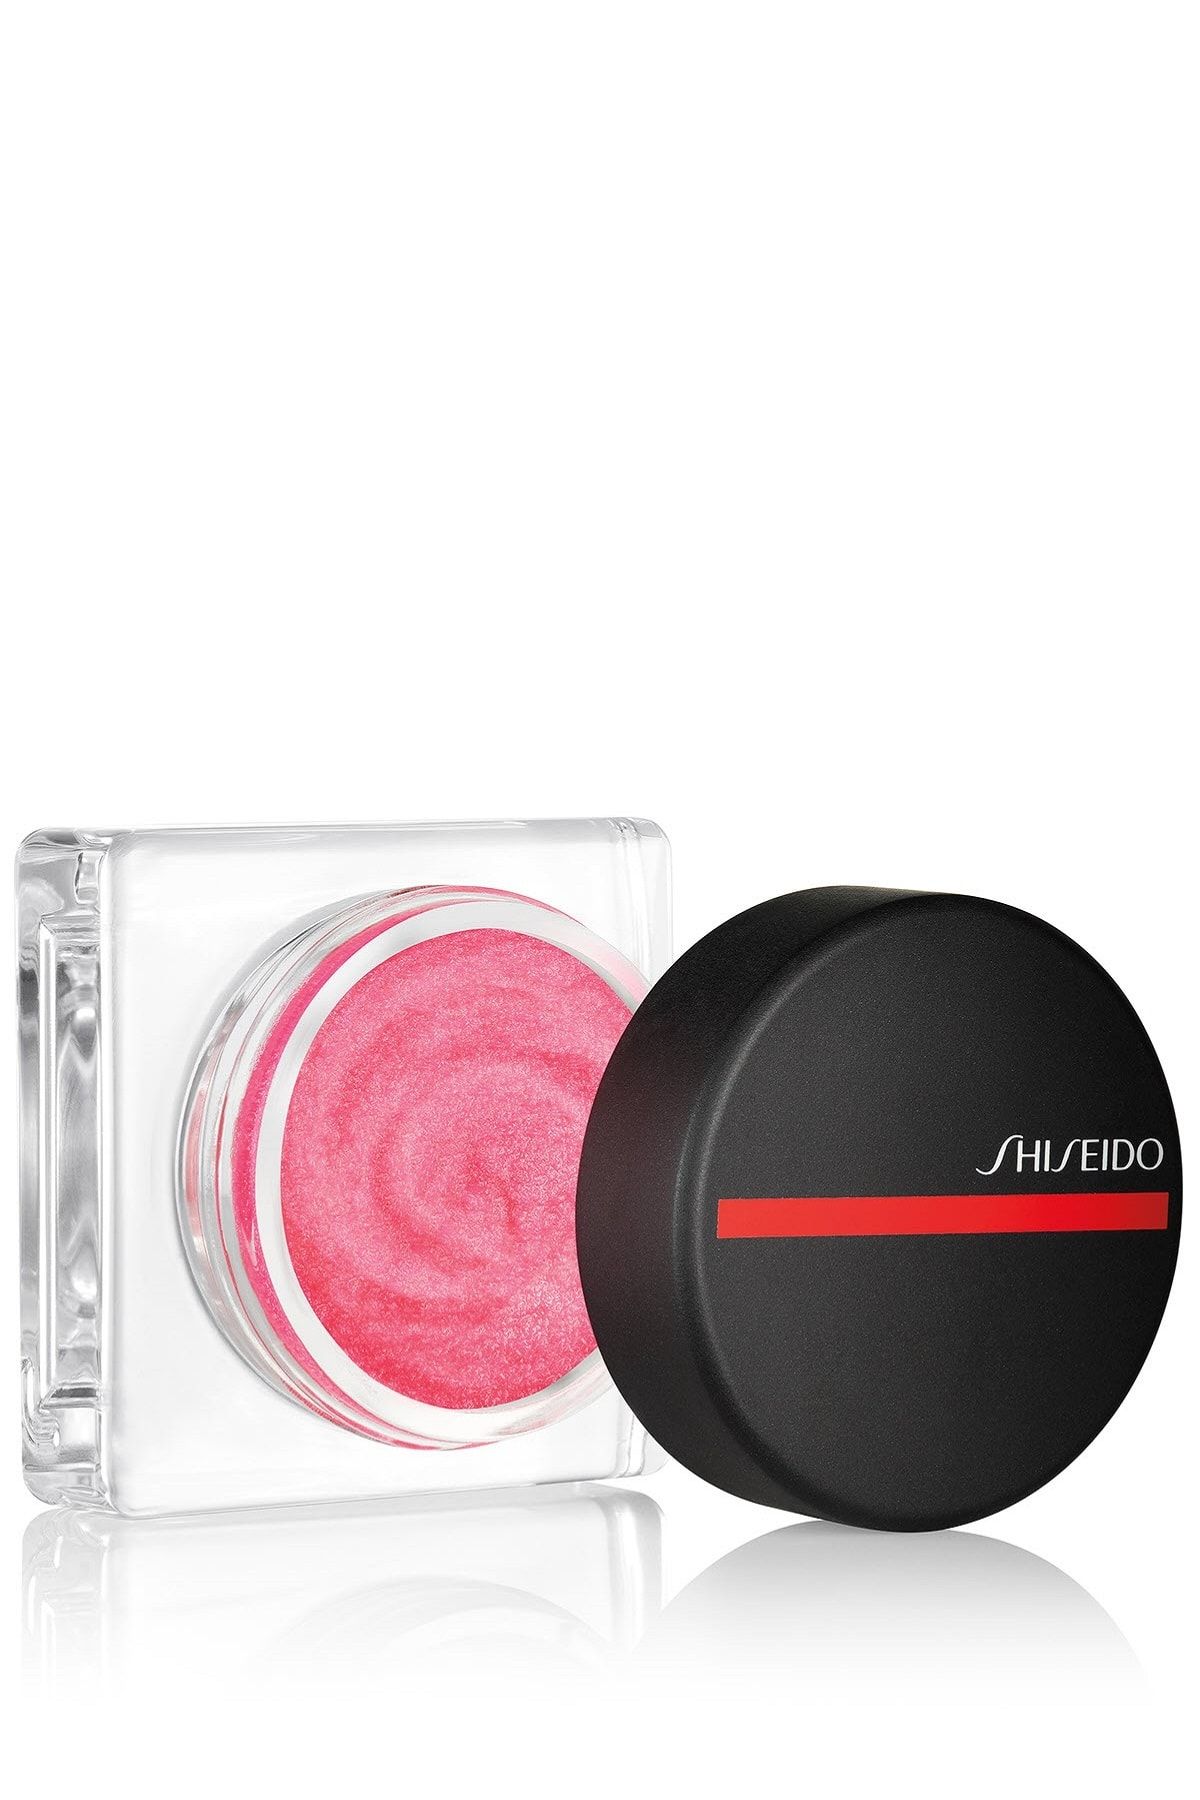 Shiseido Krem Allık - Minimalist Whippedpowder Blush 02 730852148734